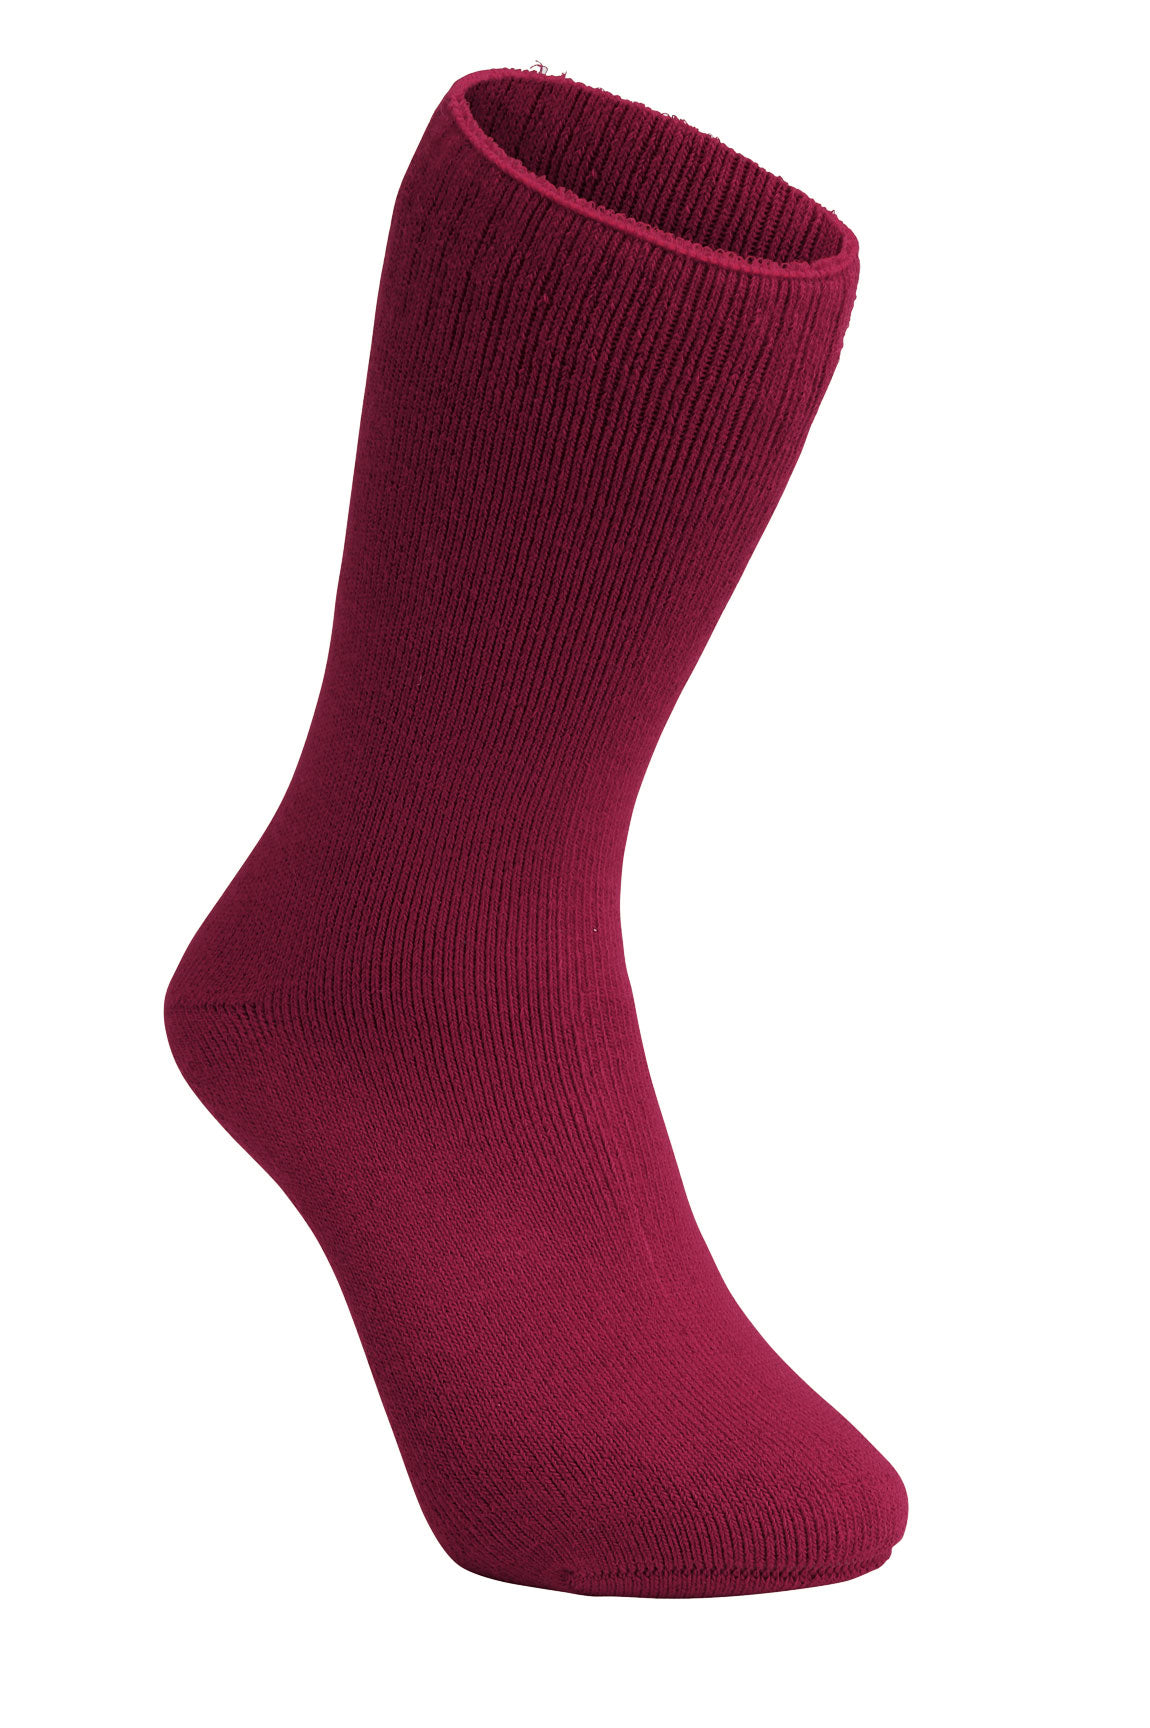 3 Peaks Bamboo Comfort Socks [Sz:3-8 Clr:MERLOT]